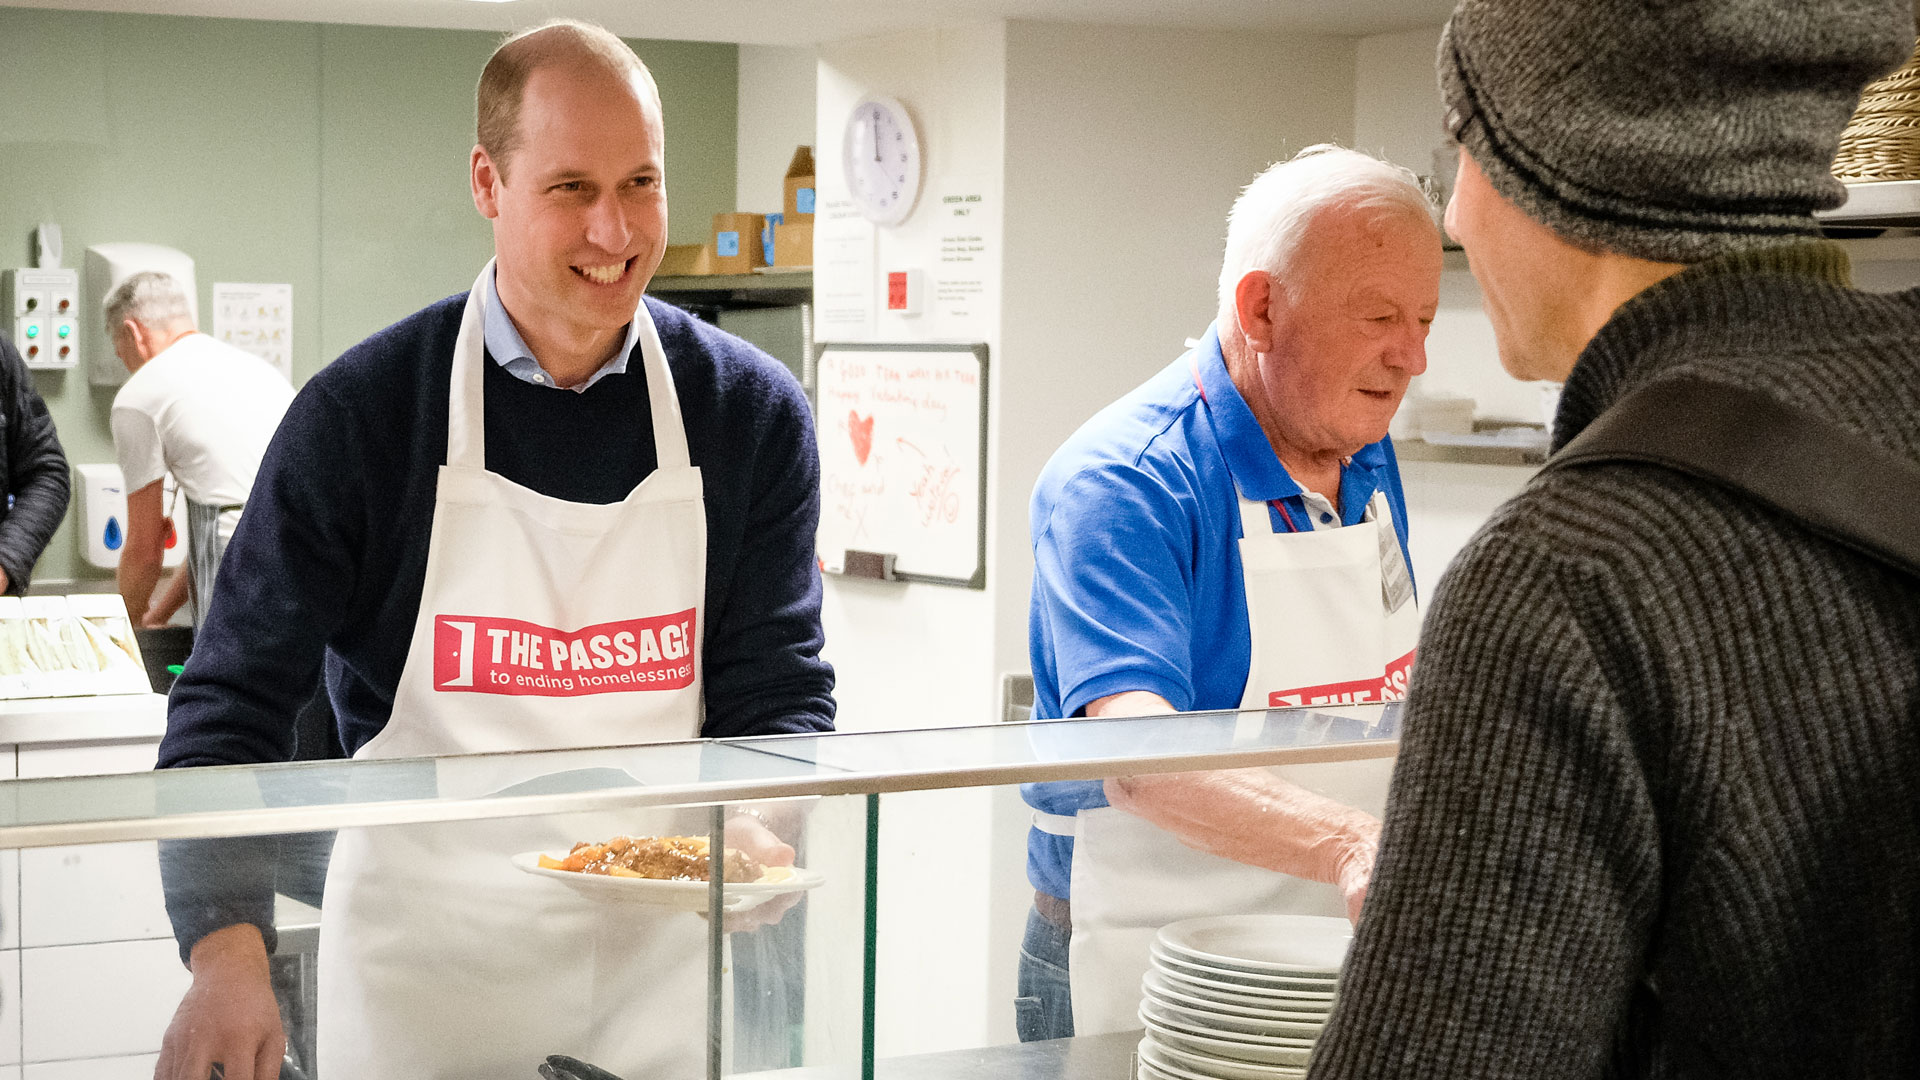 Prince William serving food